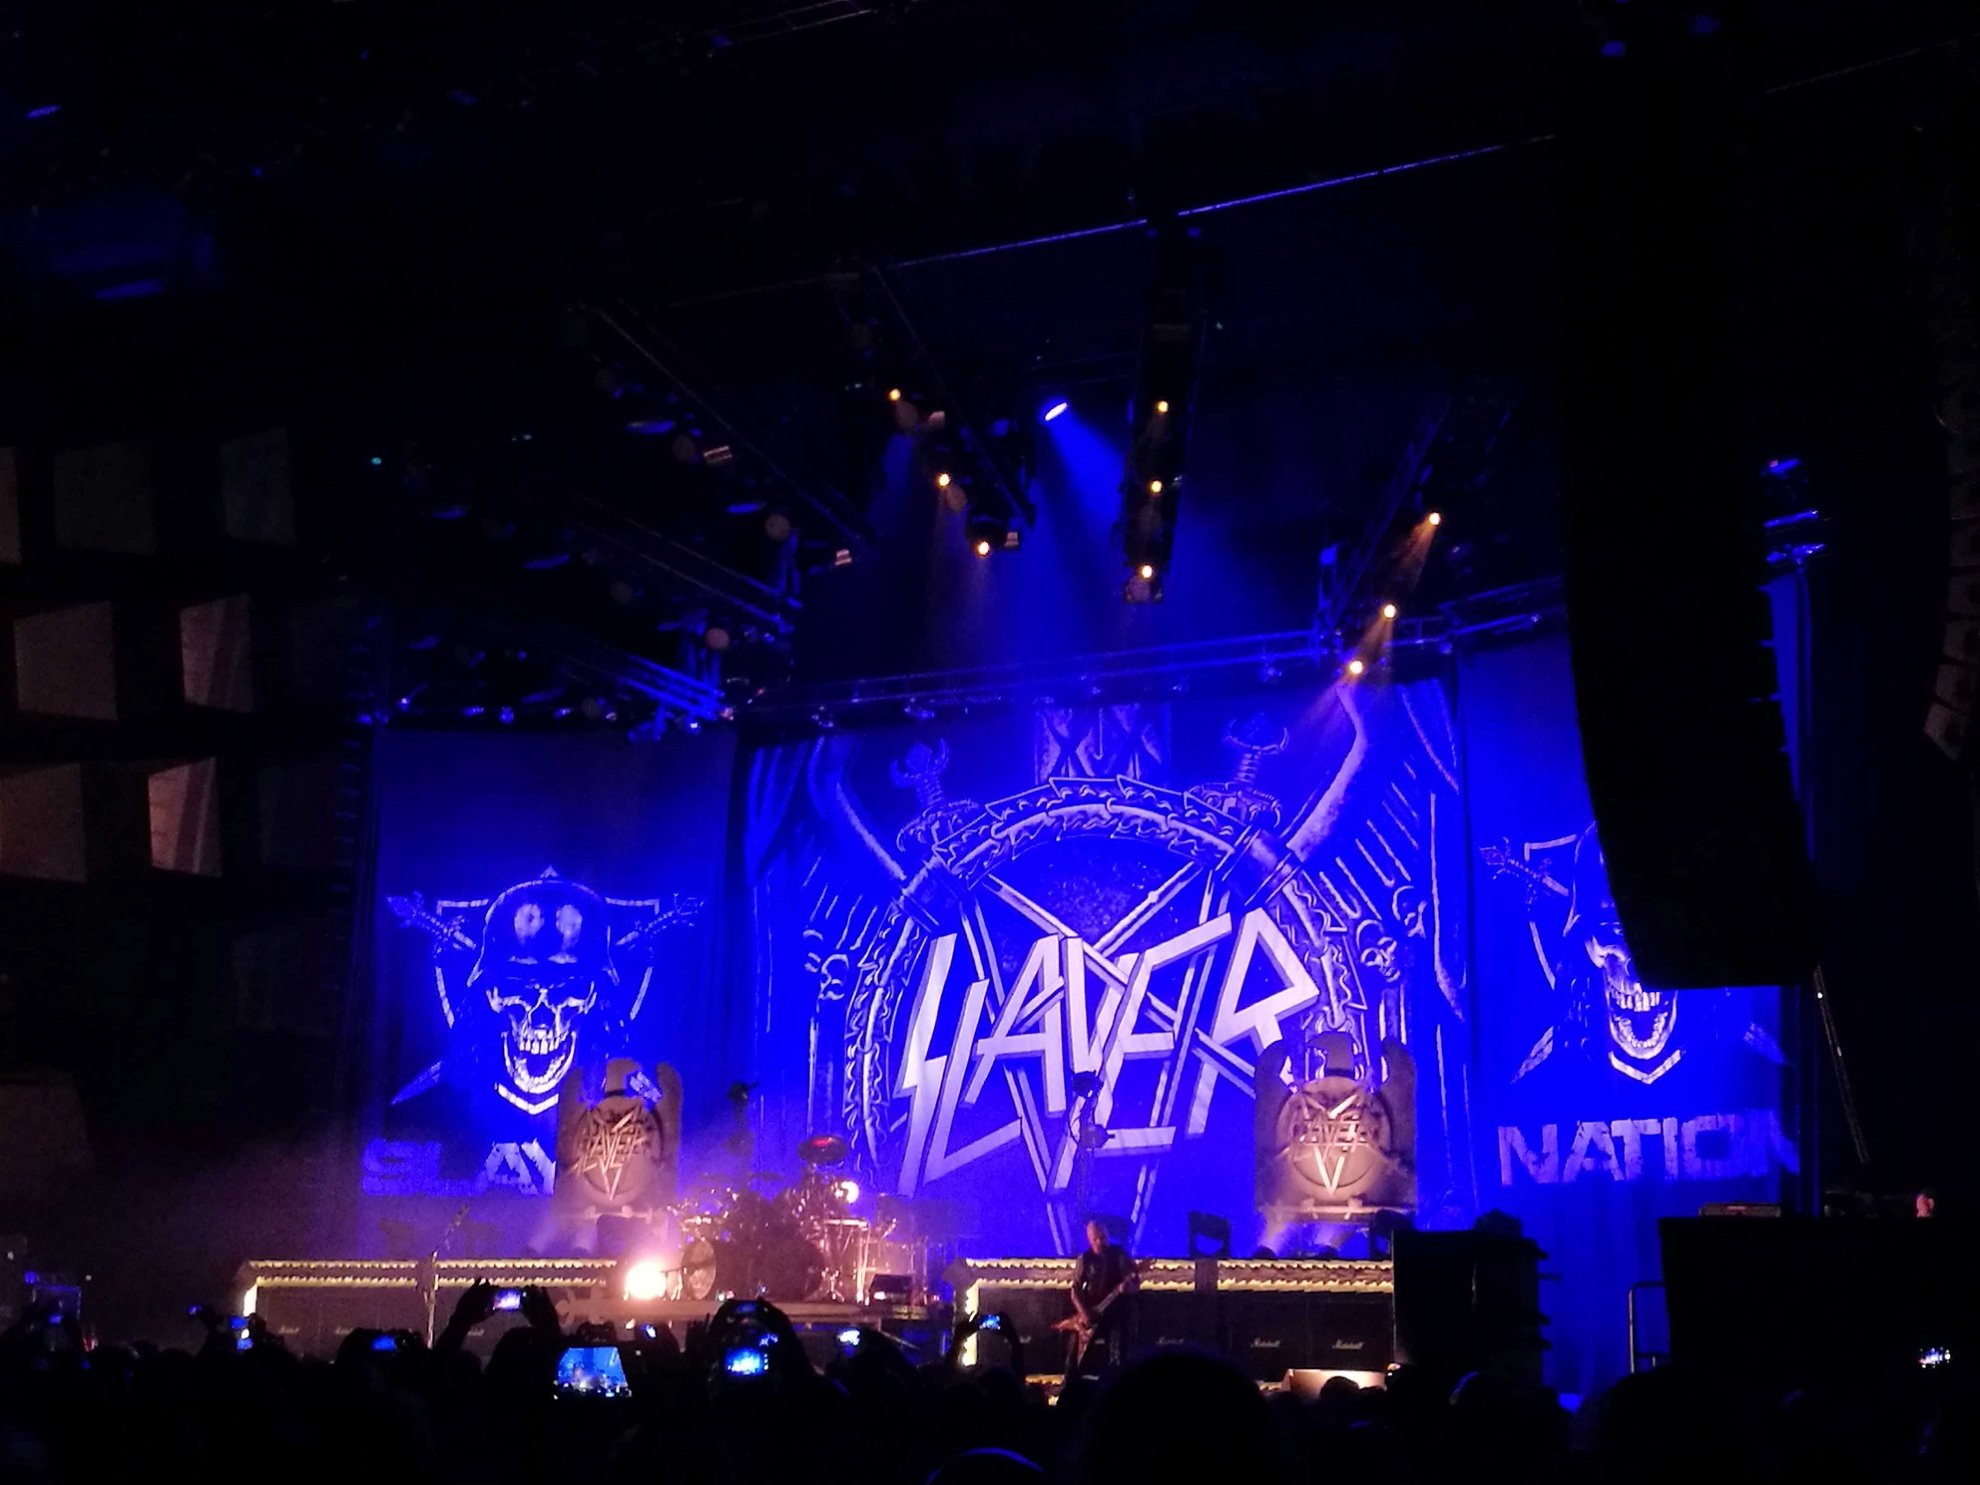  Slayer 